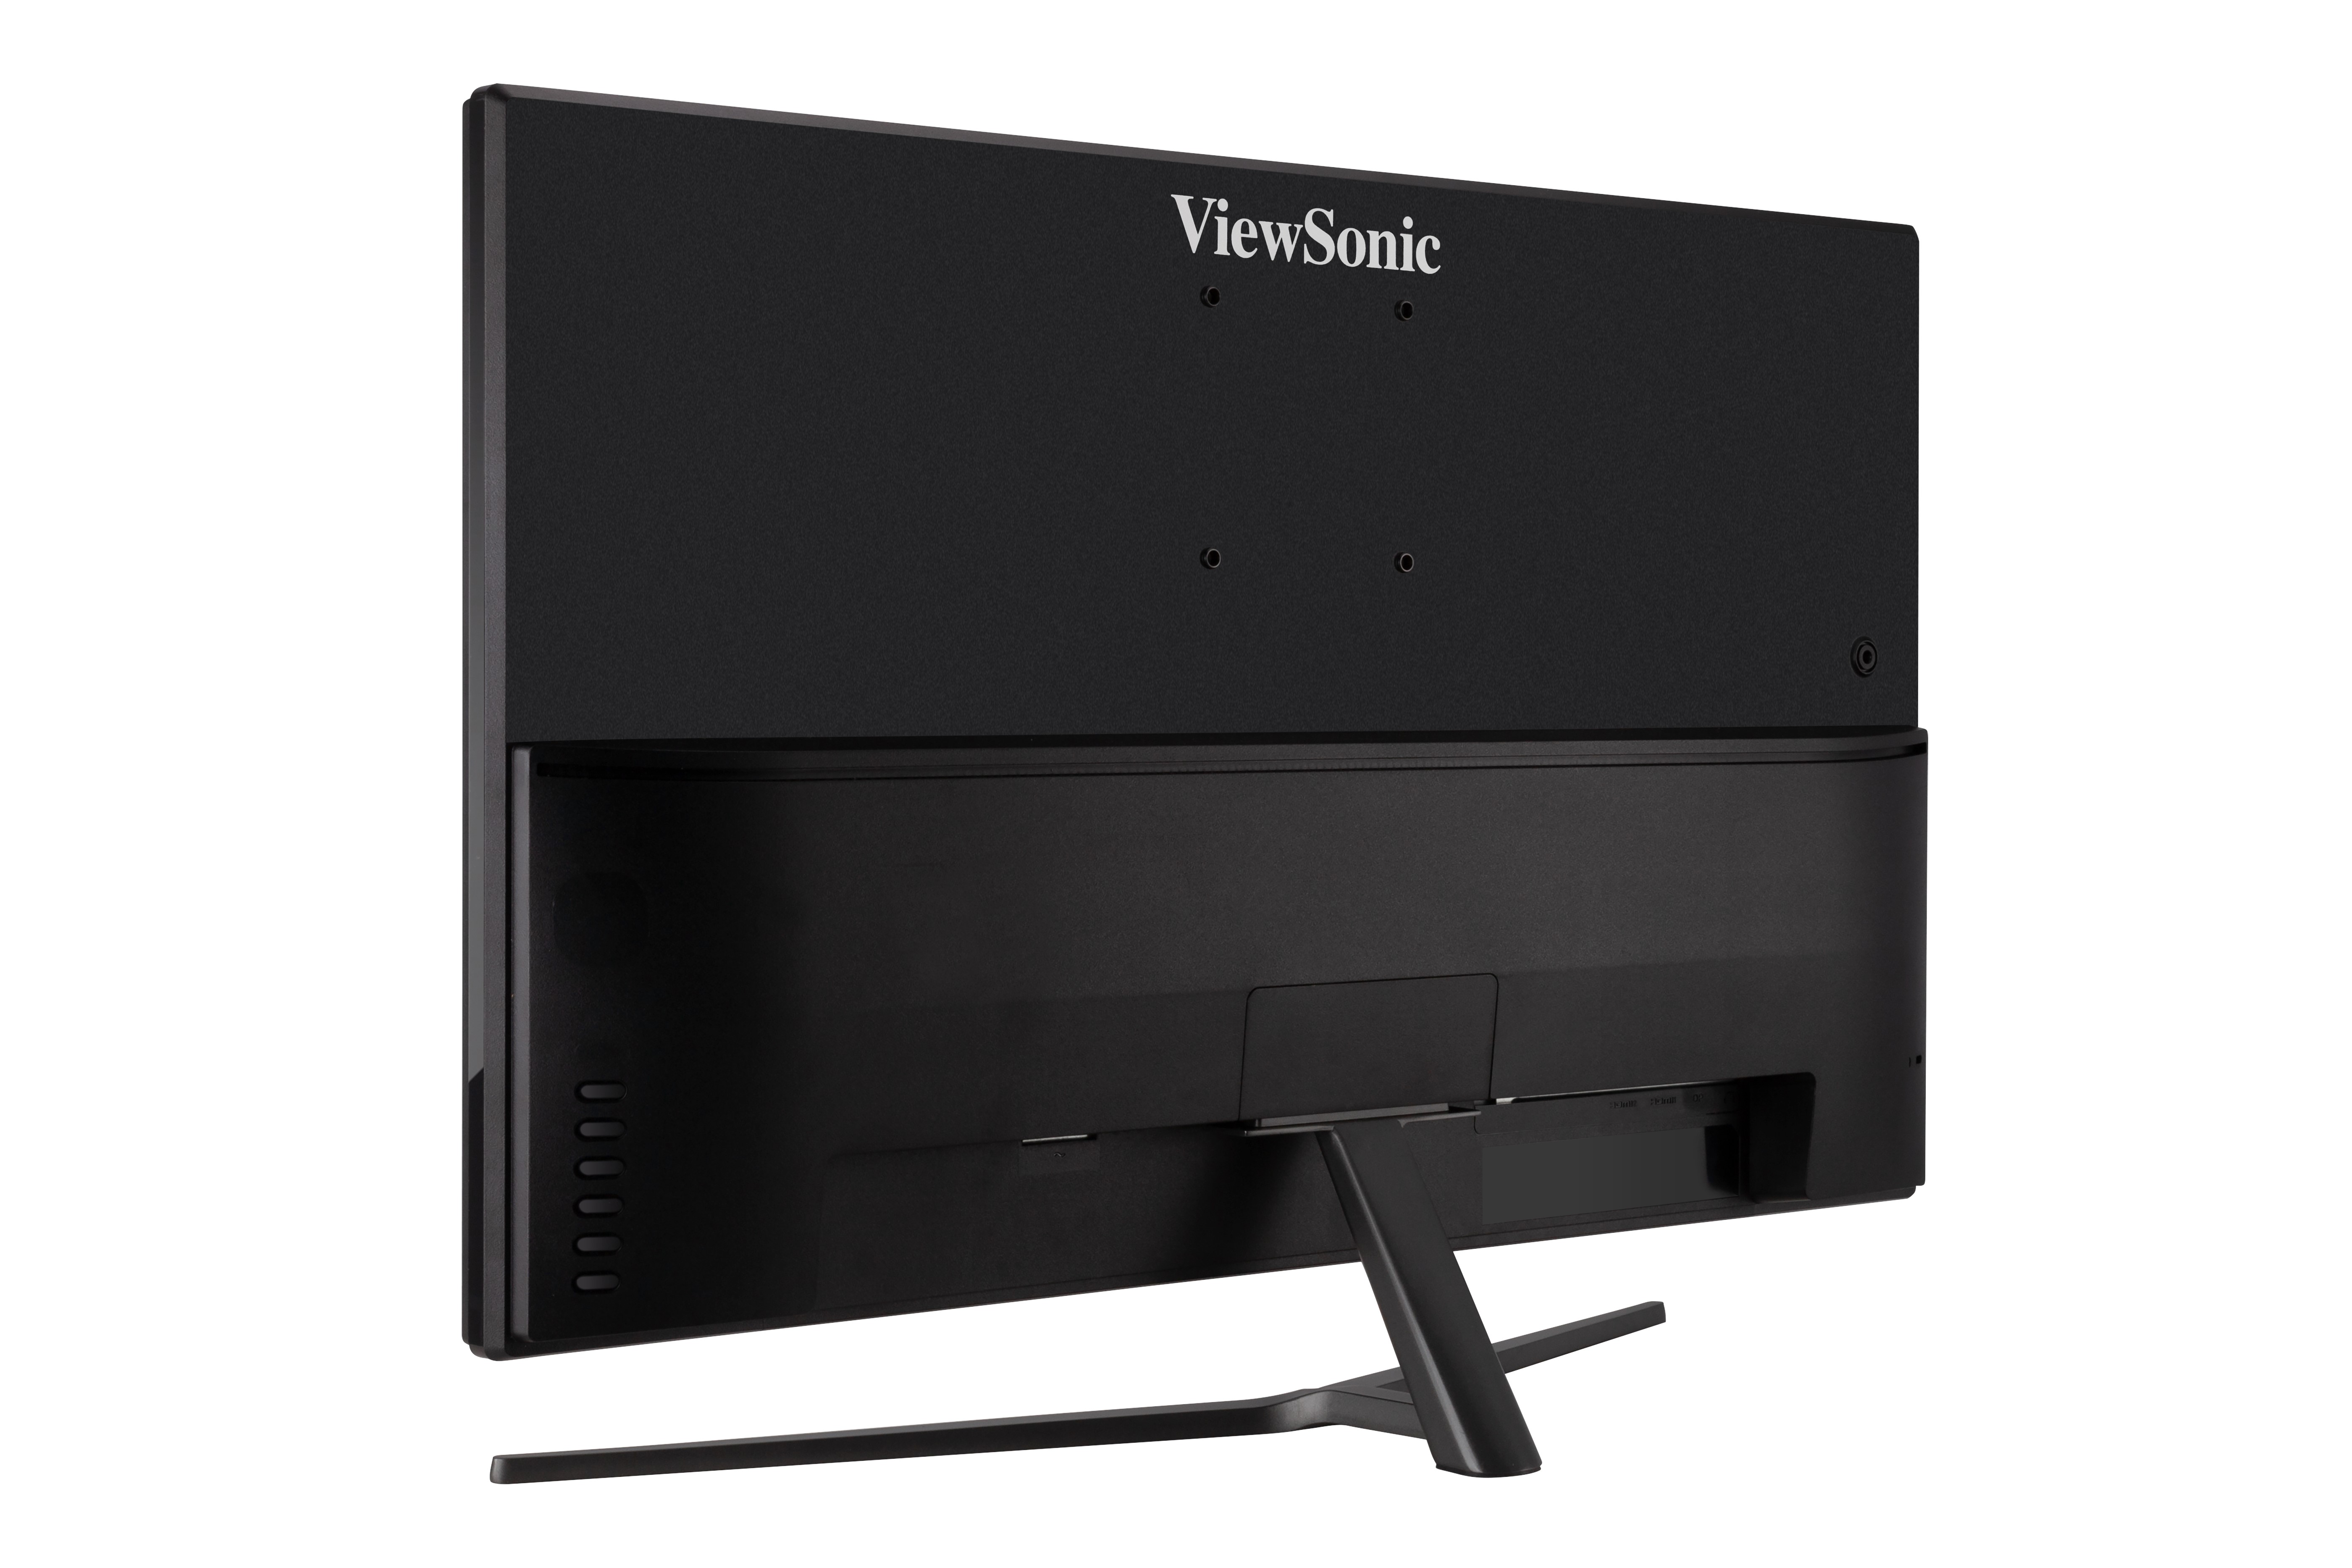 VX3211-4K-mhd 32" 4K Entertainment Monitor